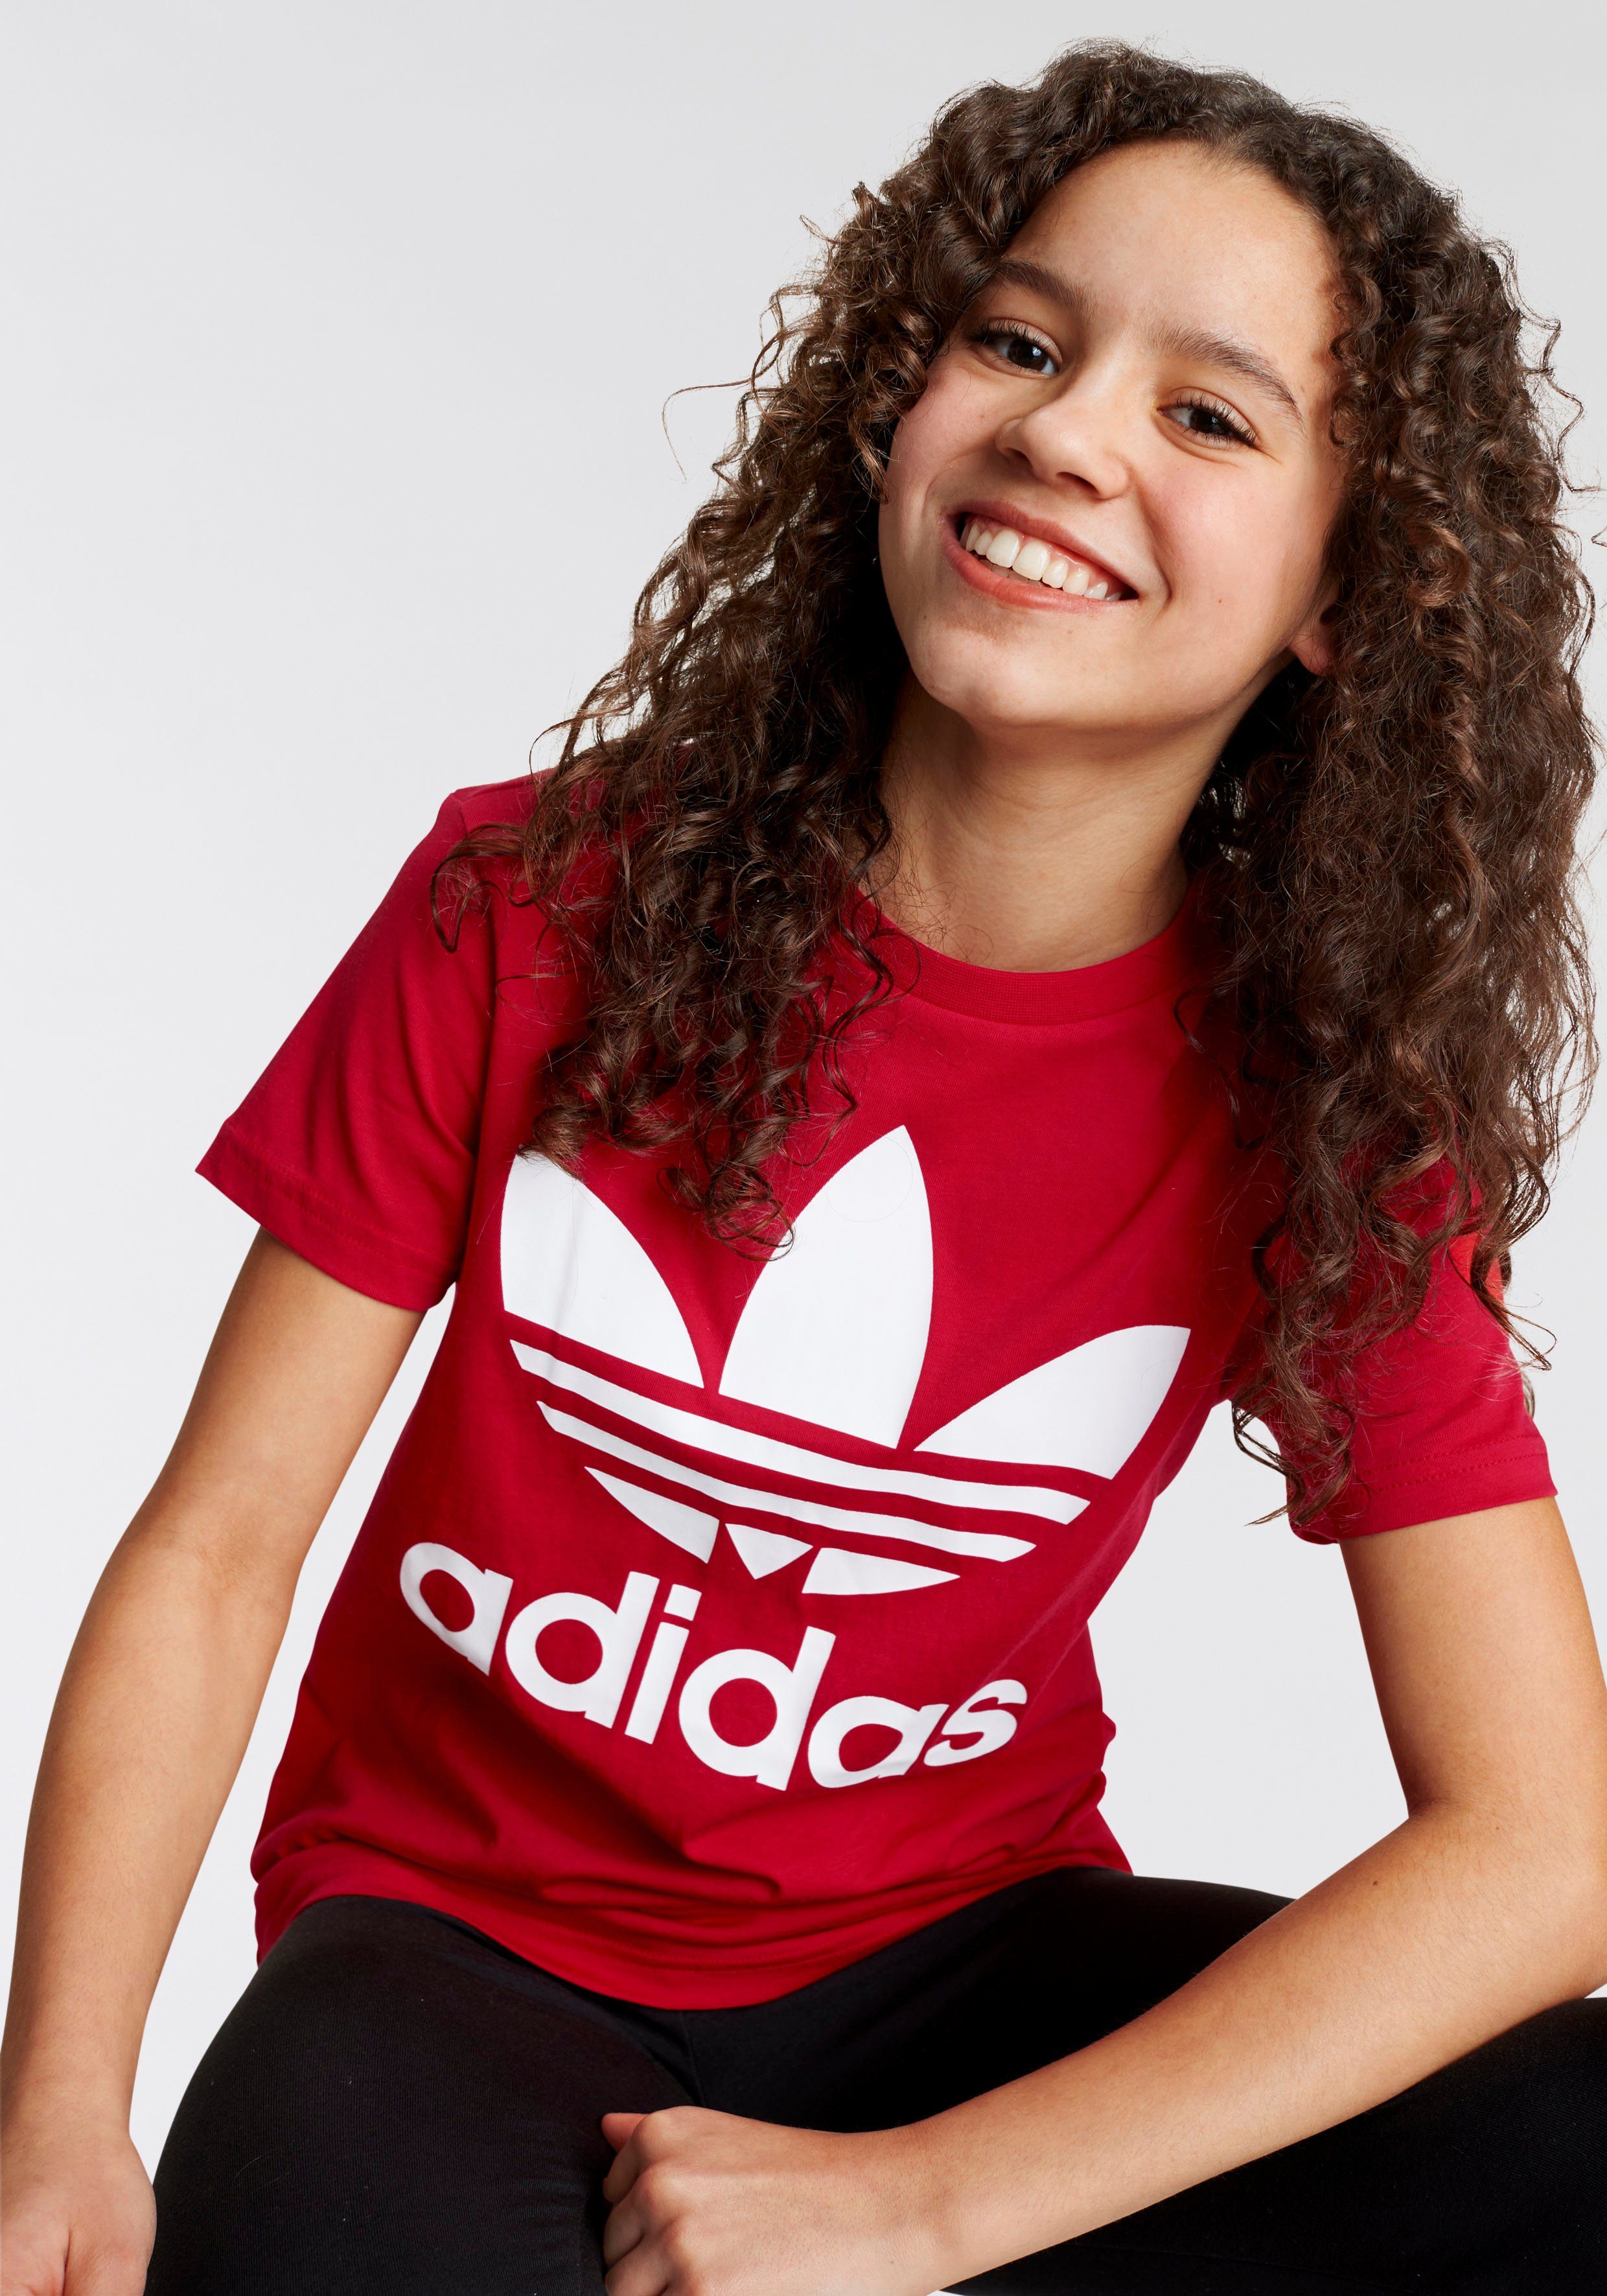 adidas Originals T-Shirt Scarlet TEE Unisex Better TREFOIL